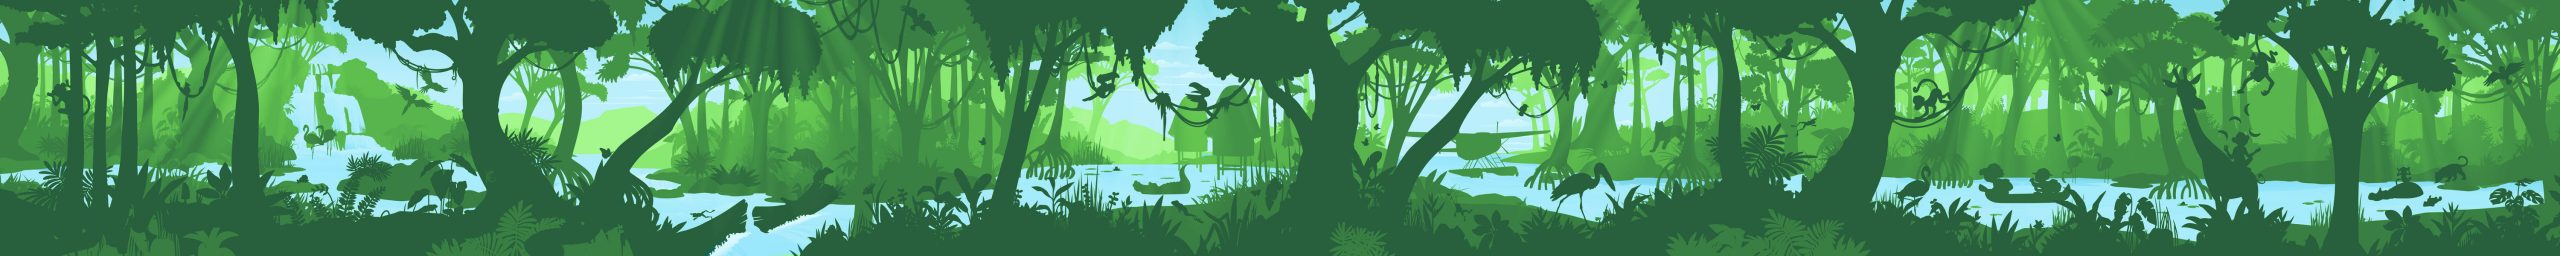 SilhouetteMural-Jungle1